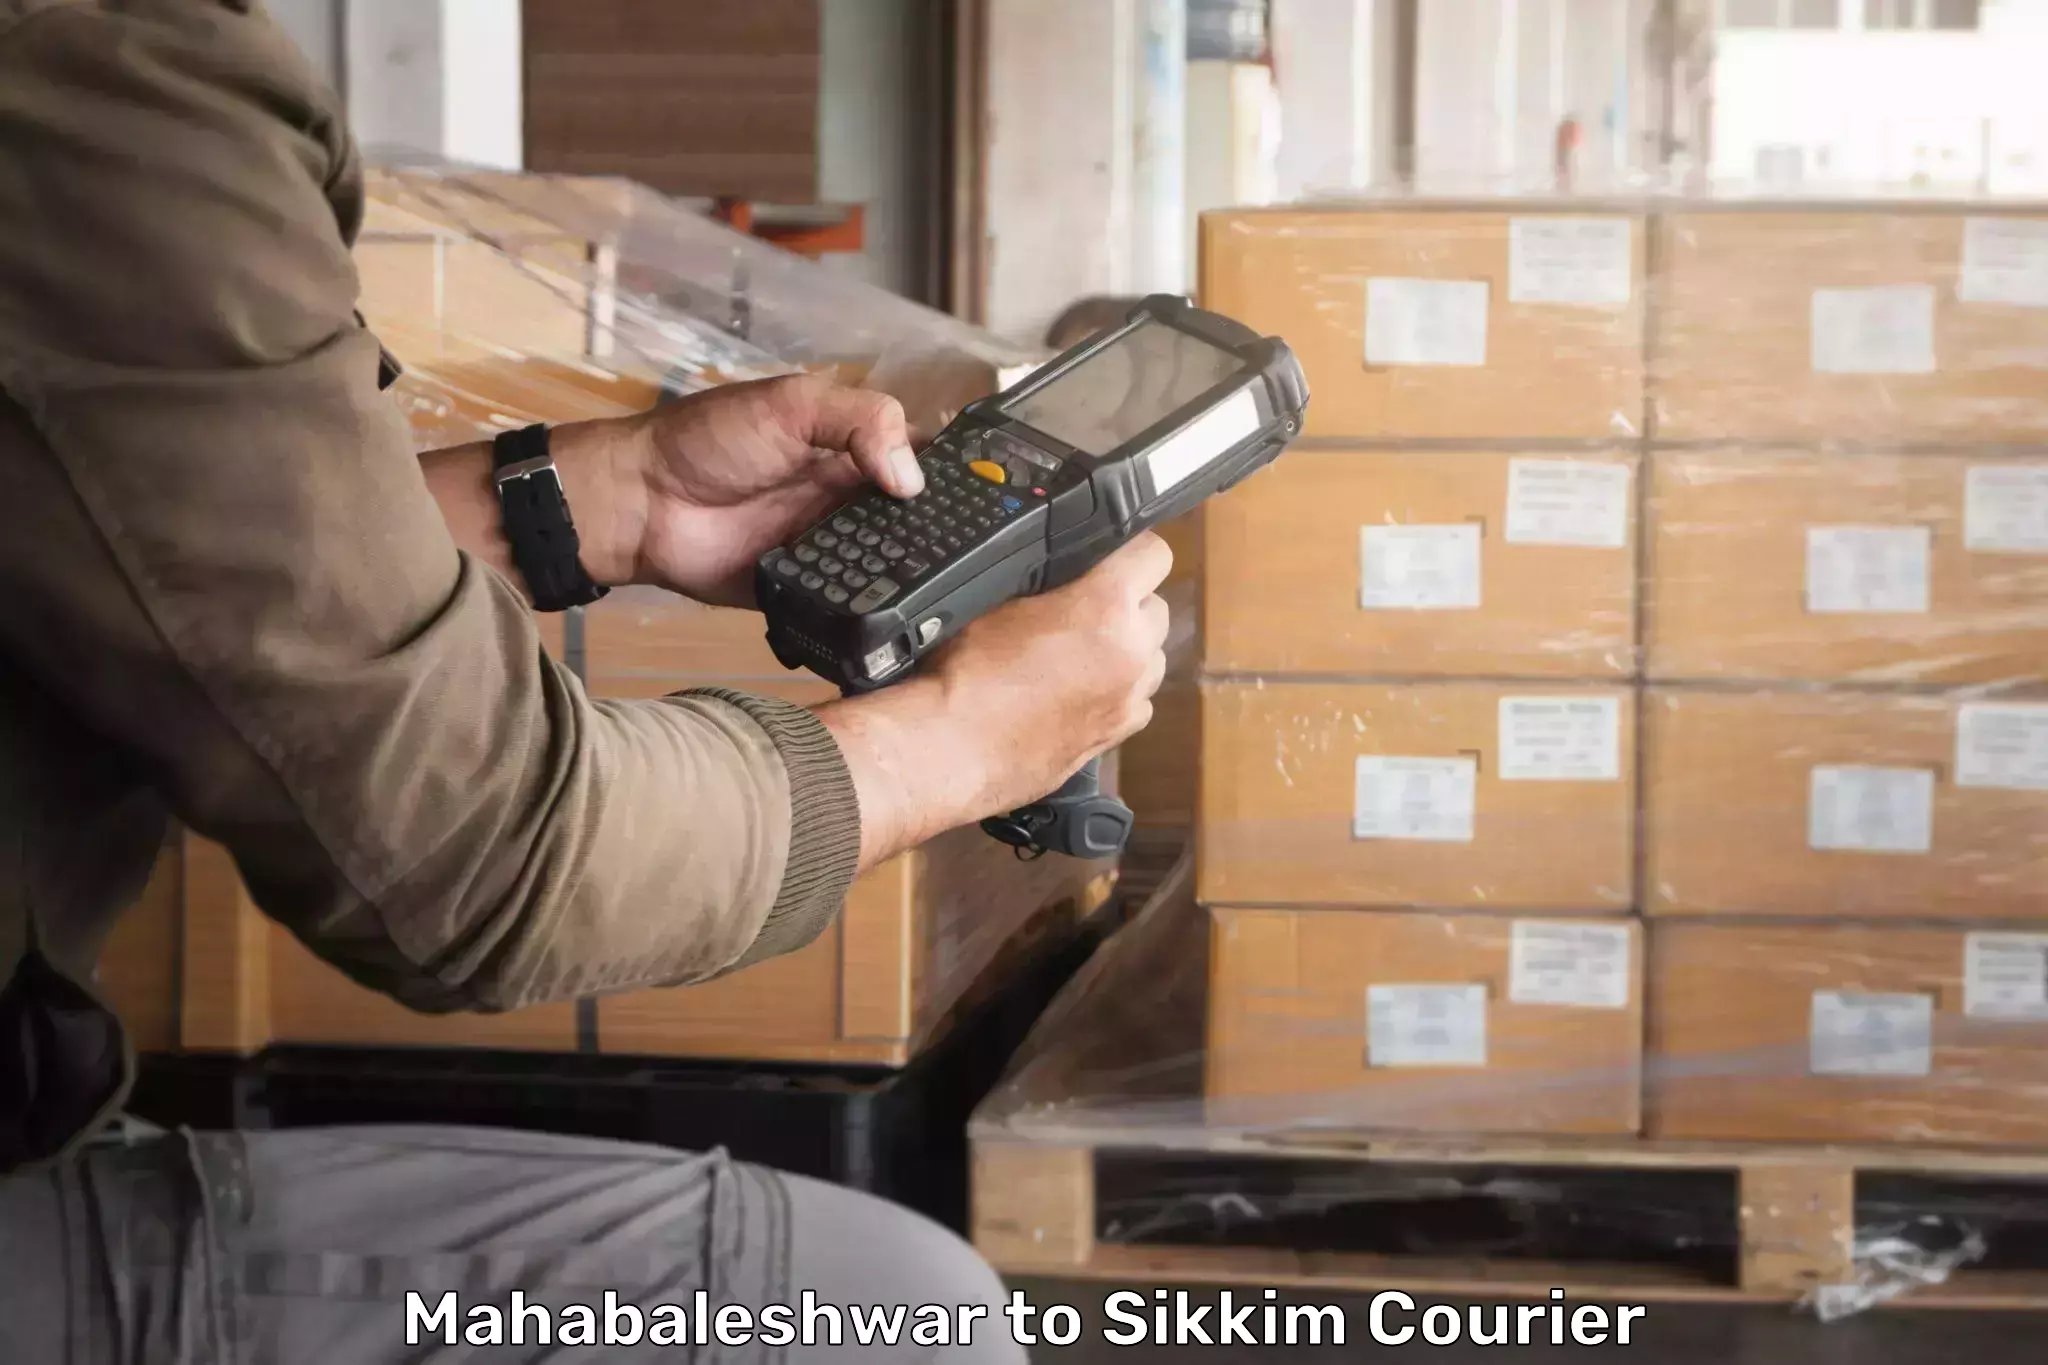 Global logistics network Mahabaleshwar to Sikkim